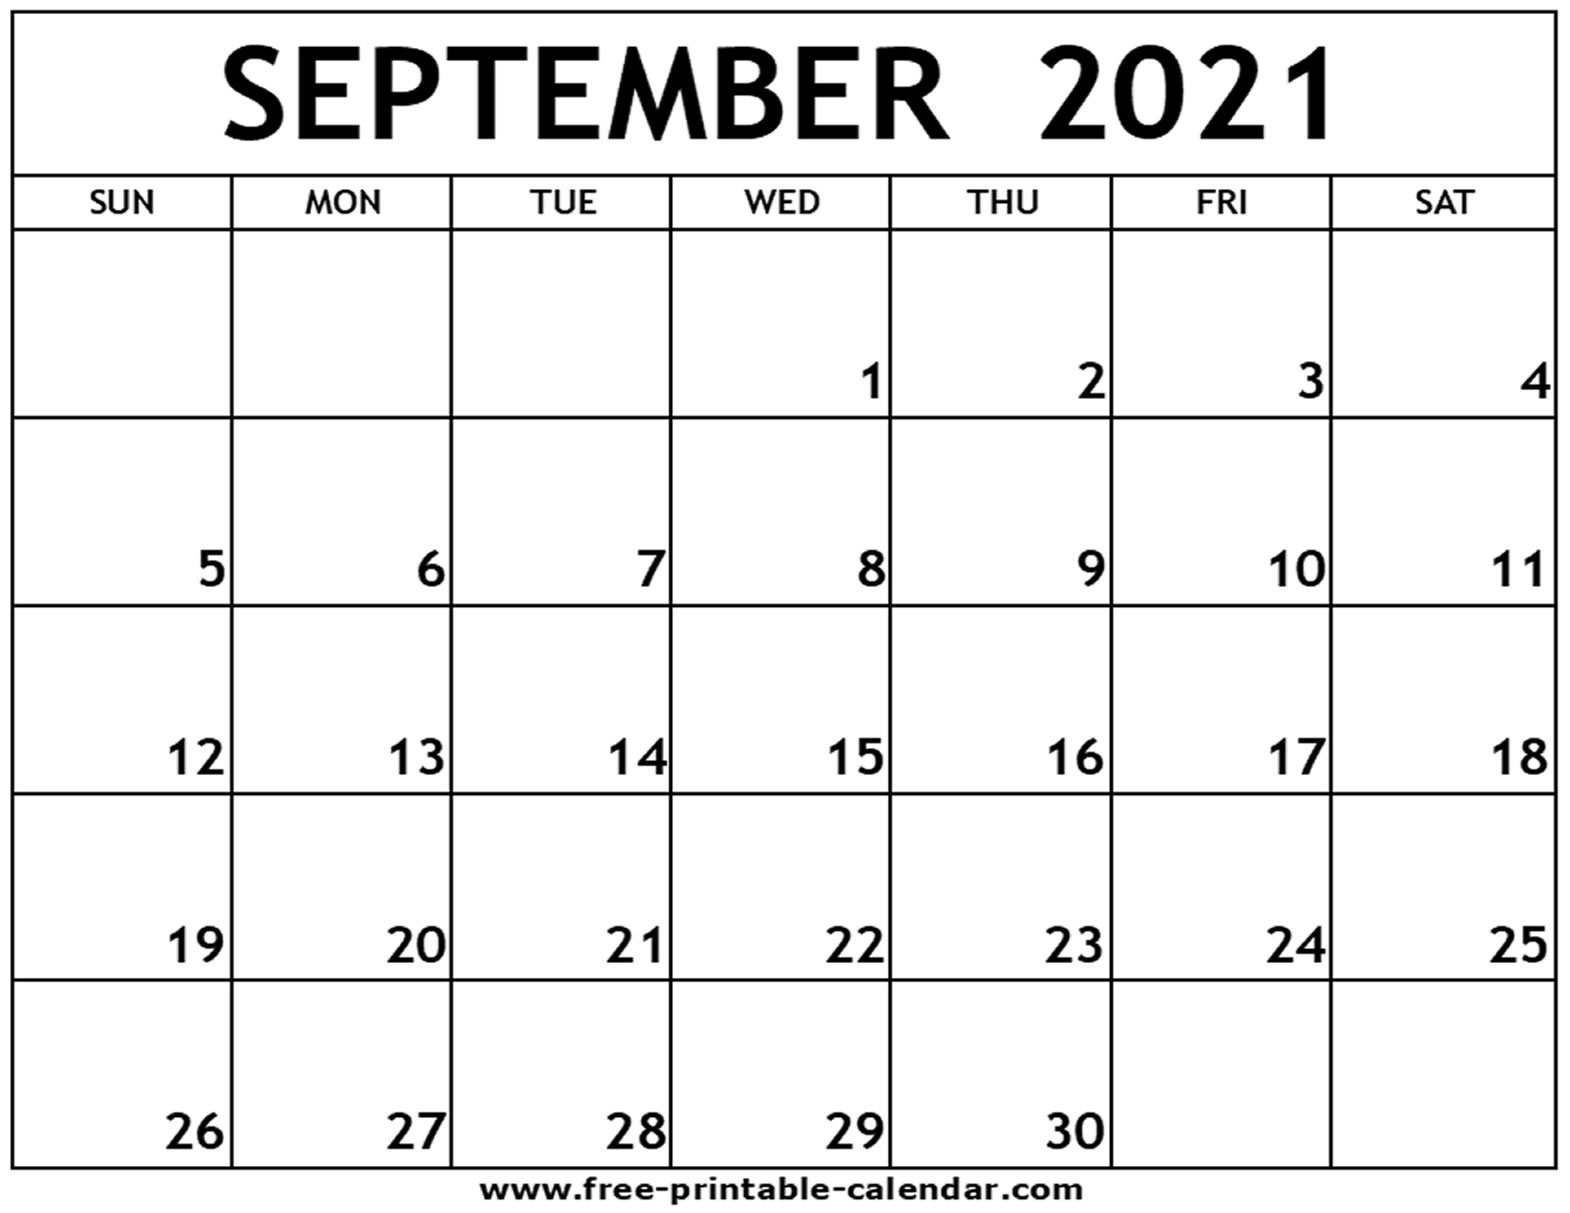 September 2021 Calendar | Free 2021 Printable Calendars Calendar For September And October 2021